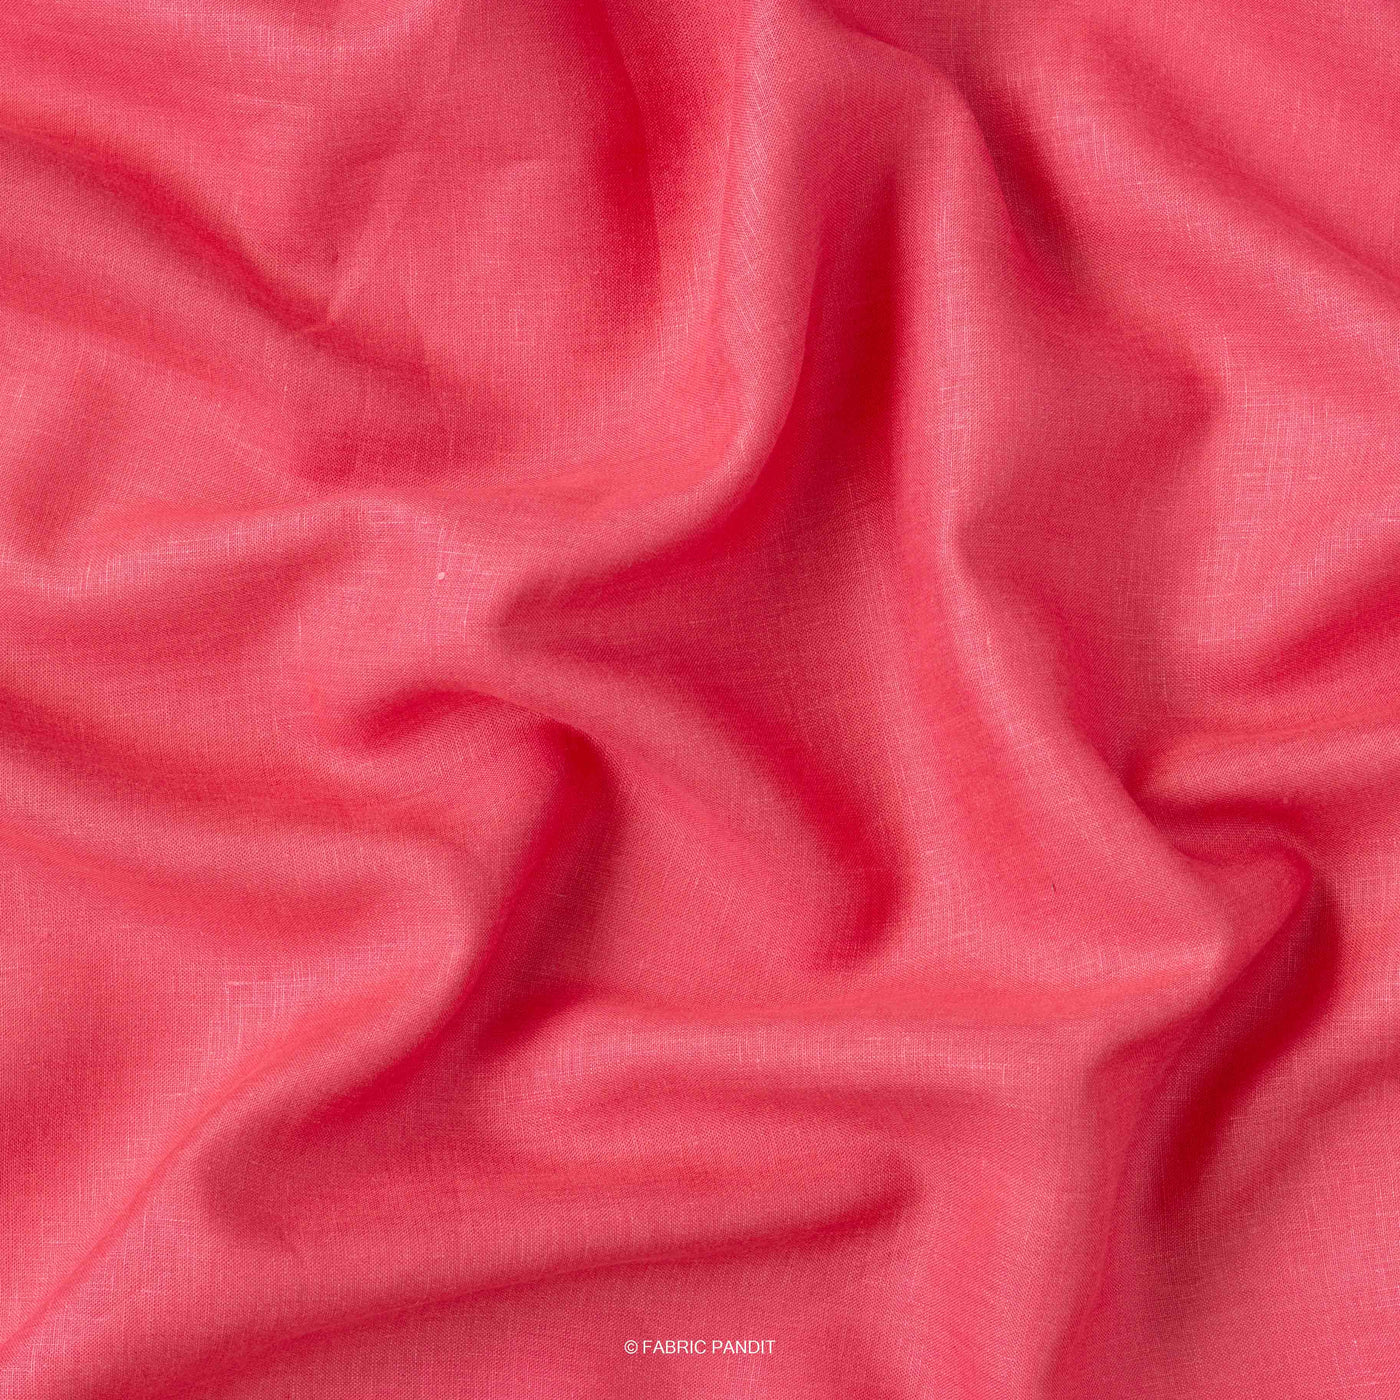 Fabric Pandit Fabric Raspberry Red Plain Premium 60 Lea Pure Linen Fabric (Width 58 Inches)